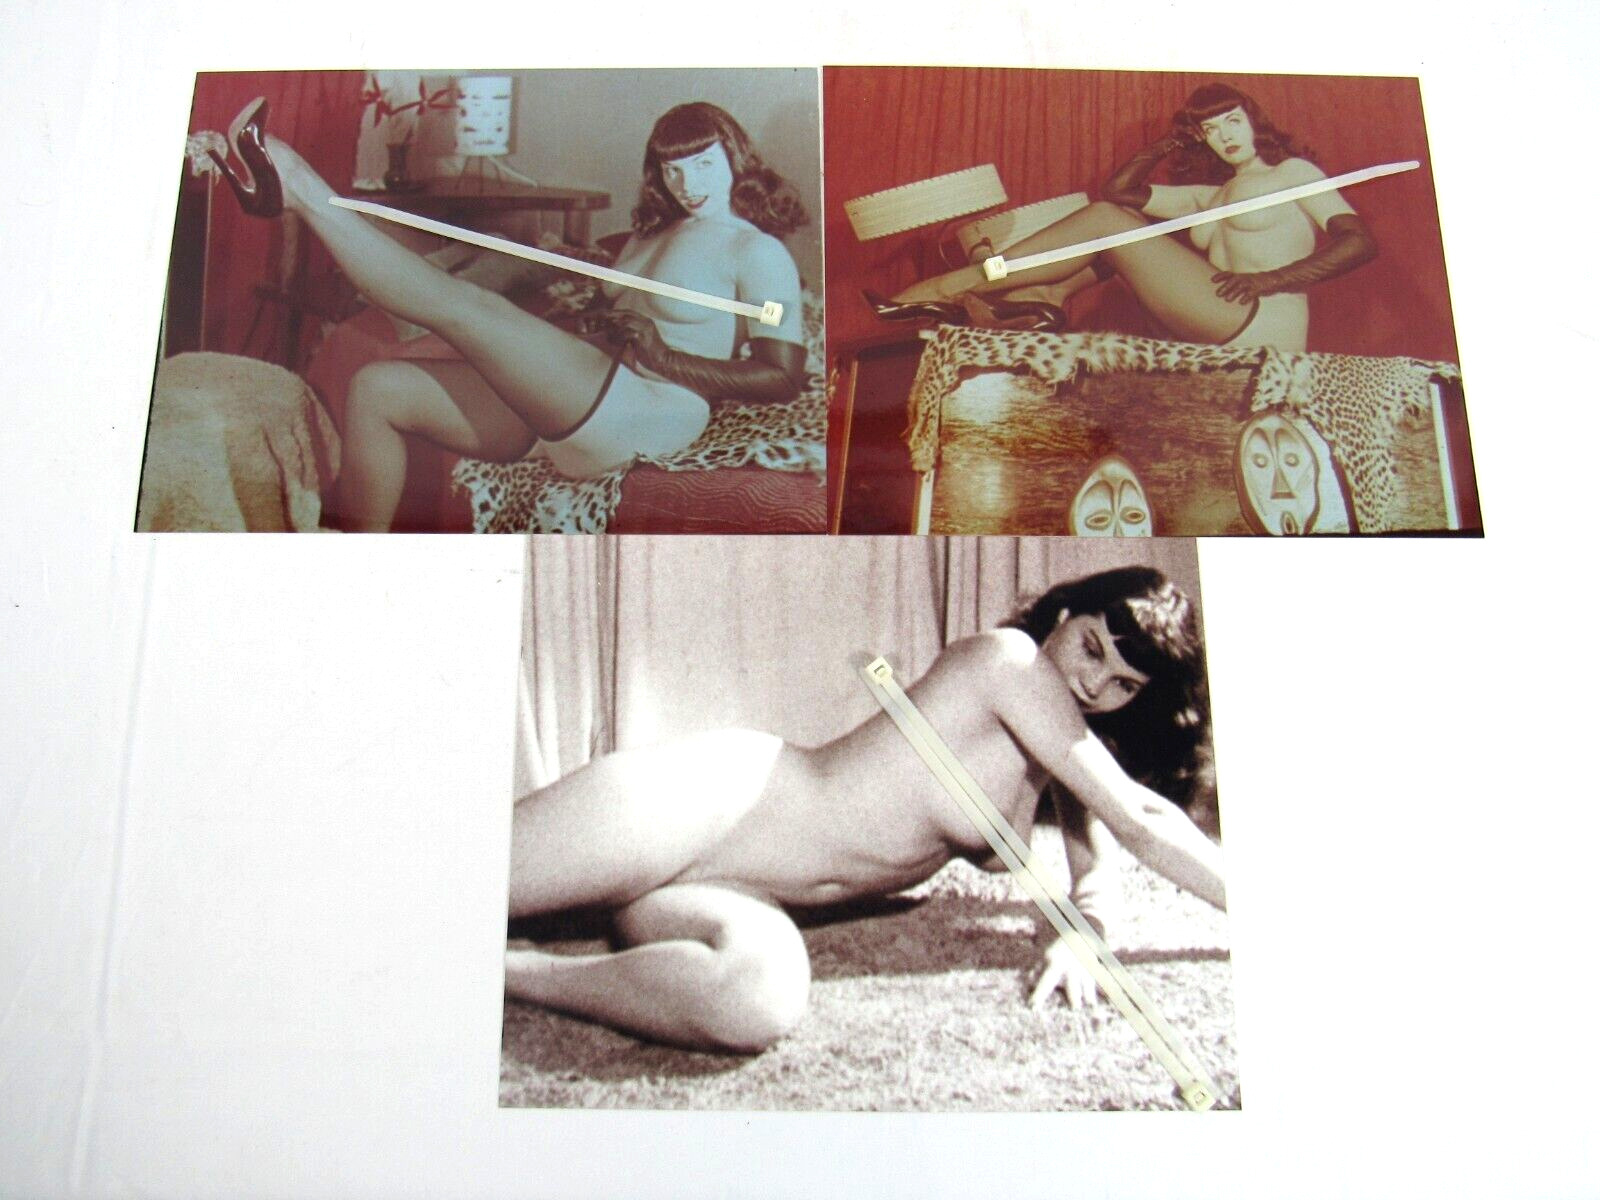 3x Bettie Page Photos Lot/Bundle 10x8 Kodak Royal Paper Nude Pinup Adult